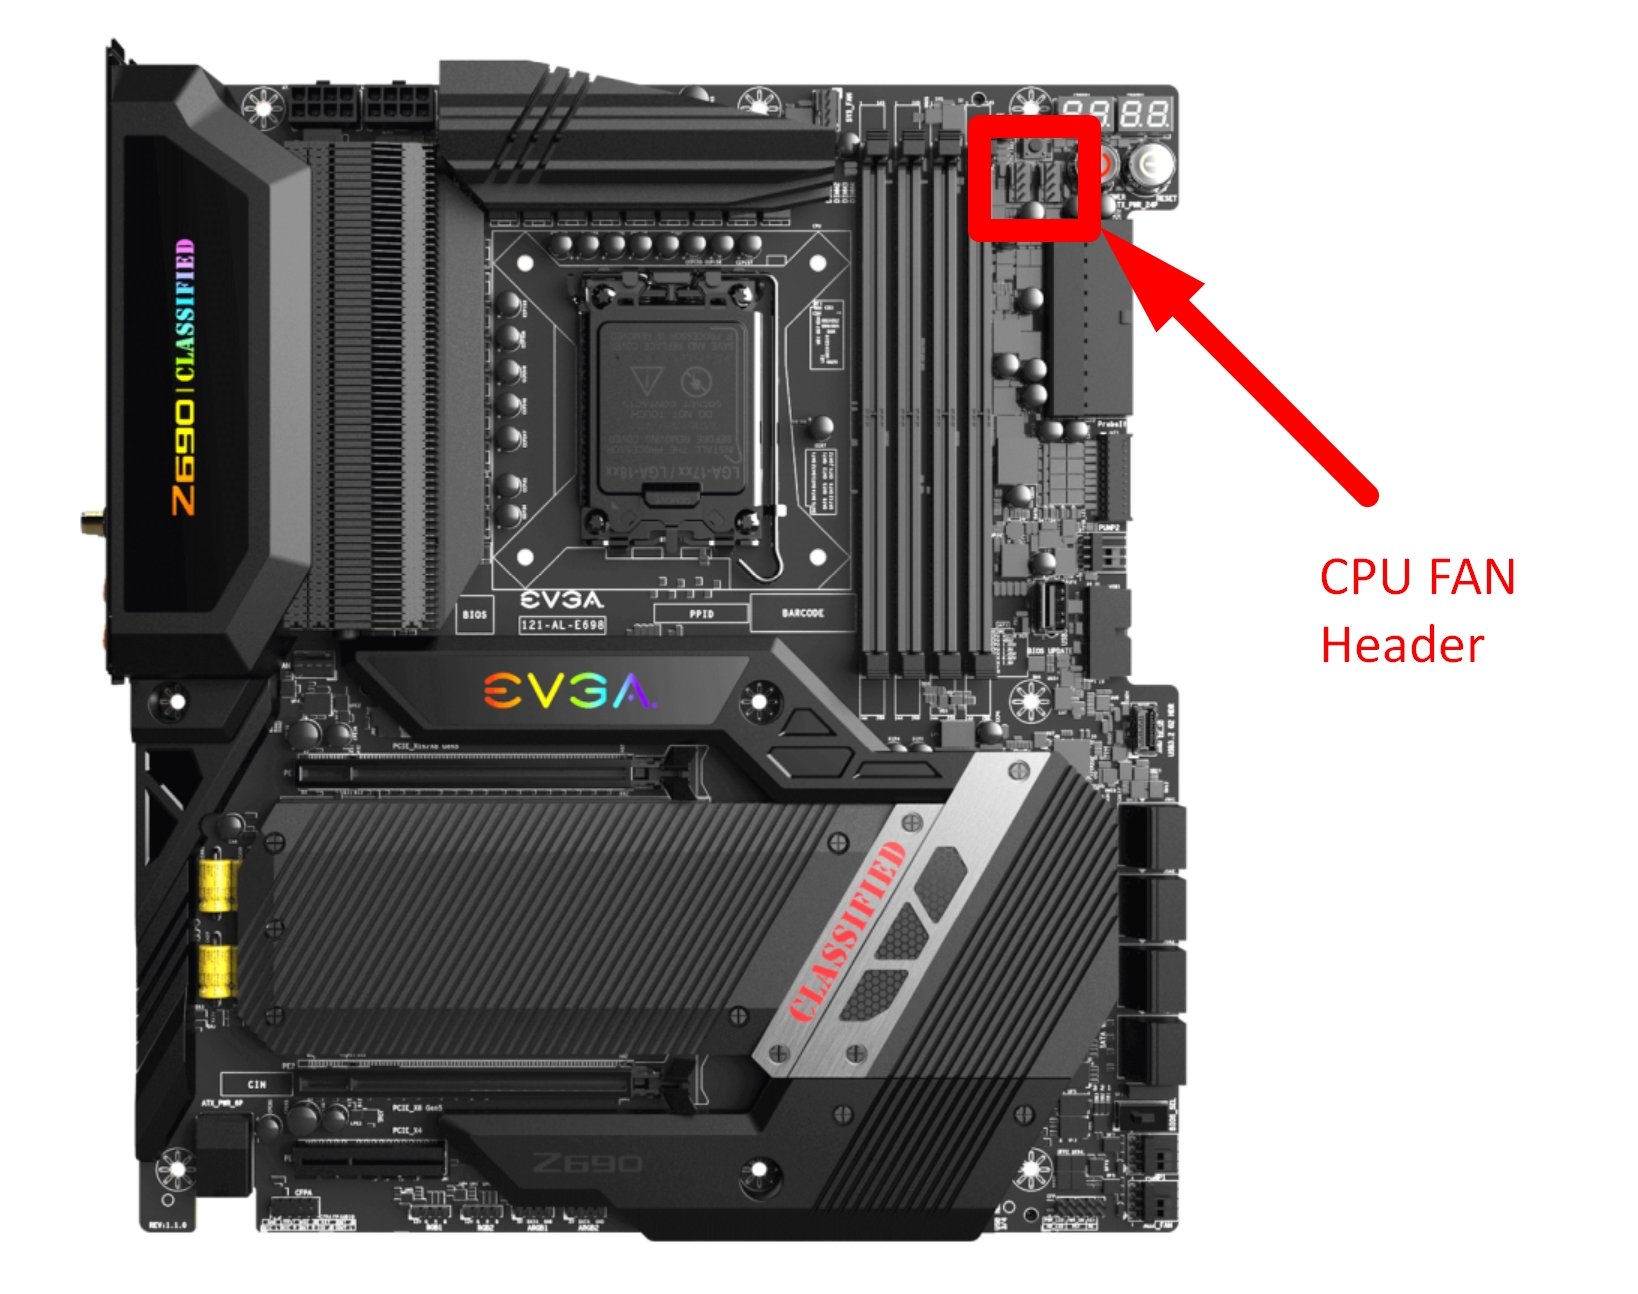 CPU Fan Header Position on Motherboard